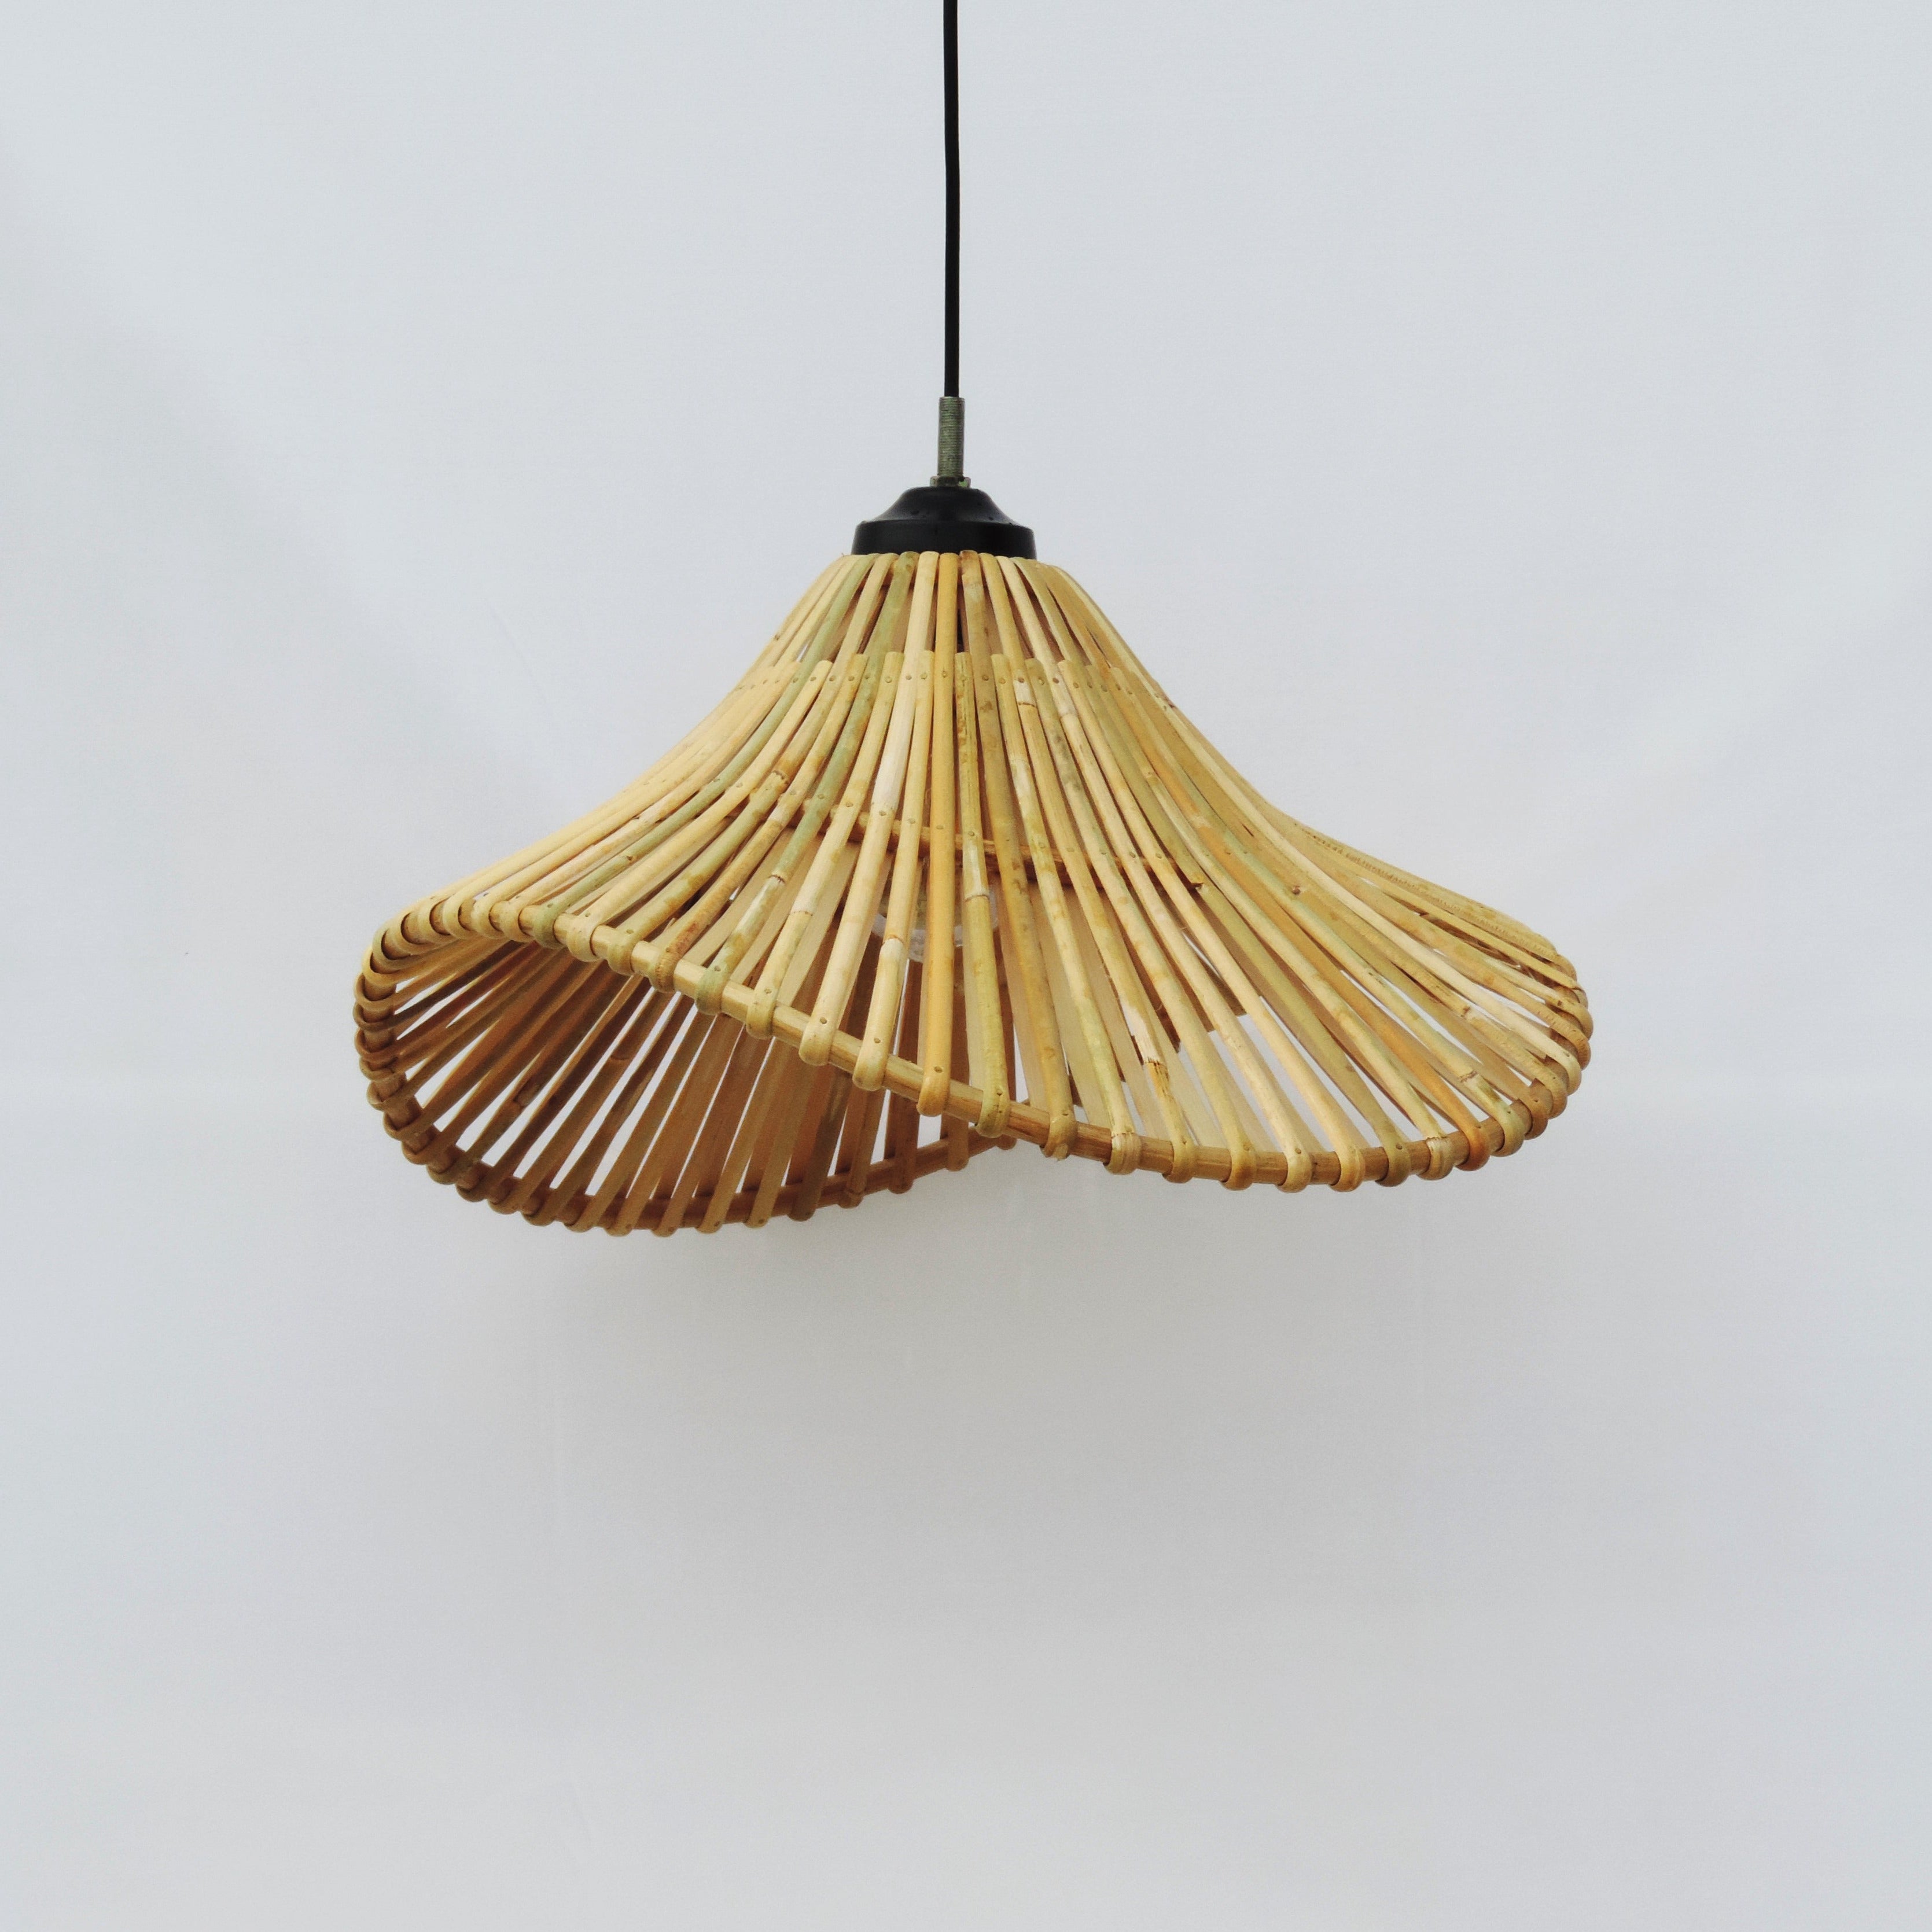 Unique Rattan Pendant Lamp for Restaurant and Offices